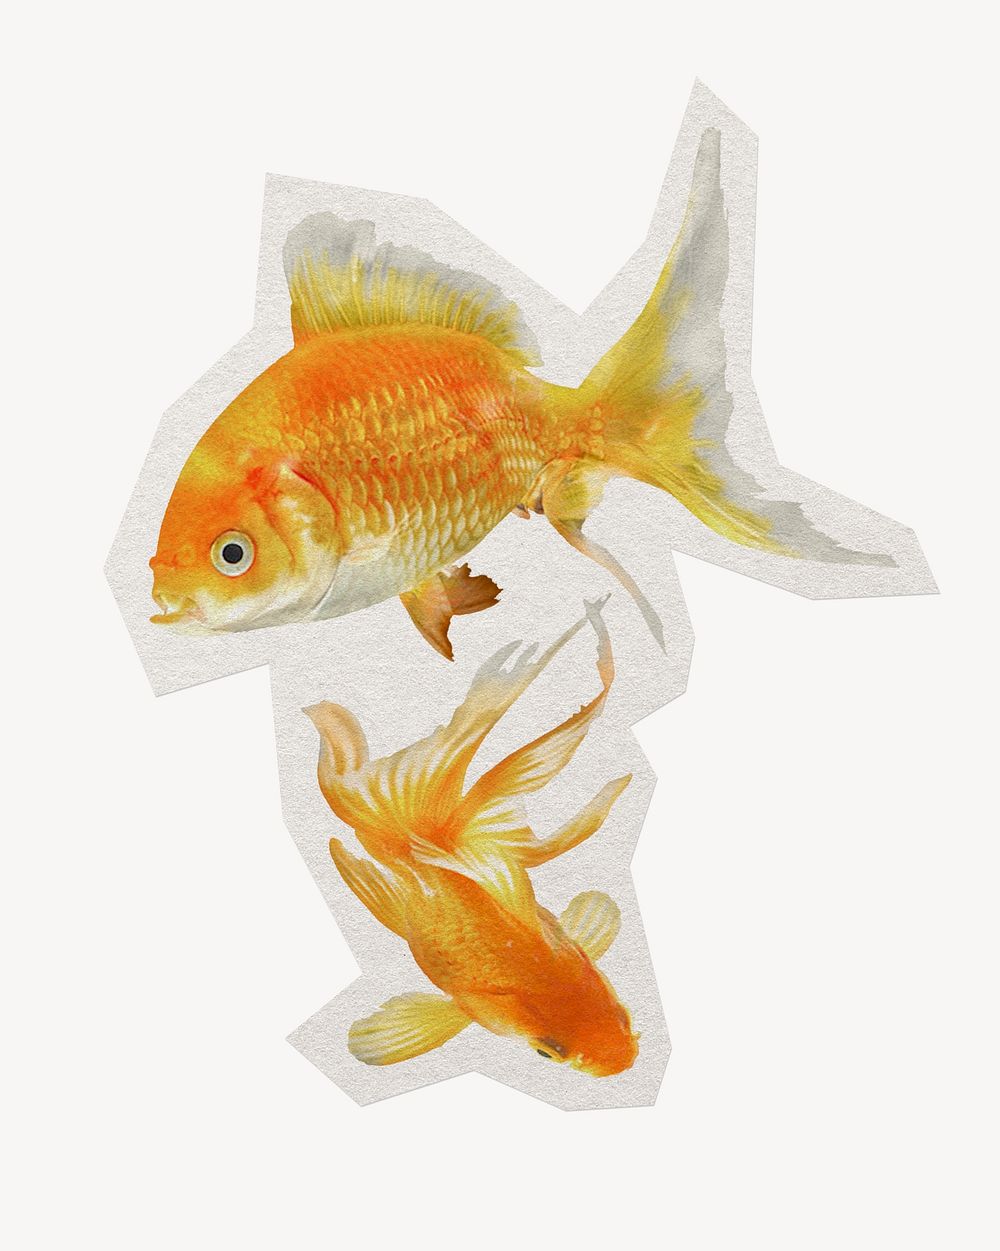 Goldfish paper element with white border